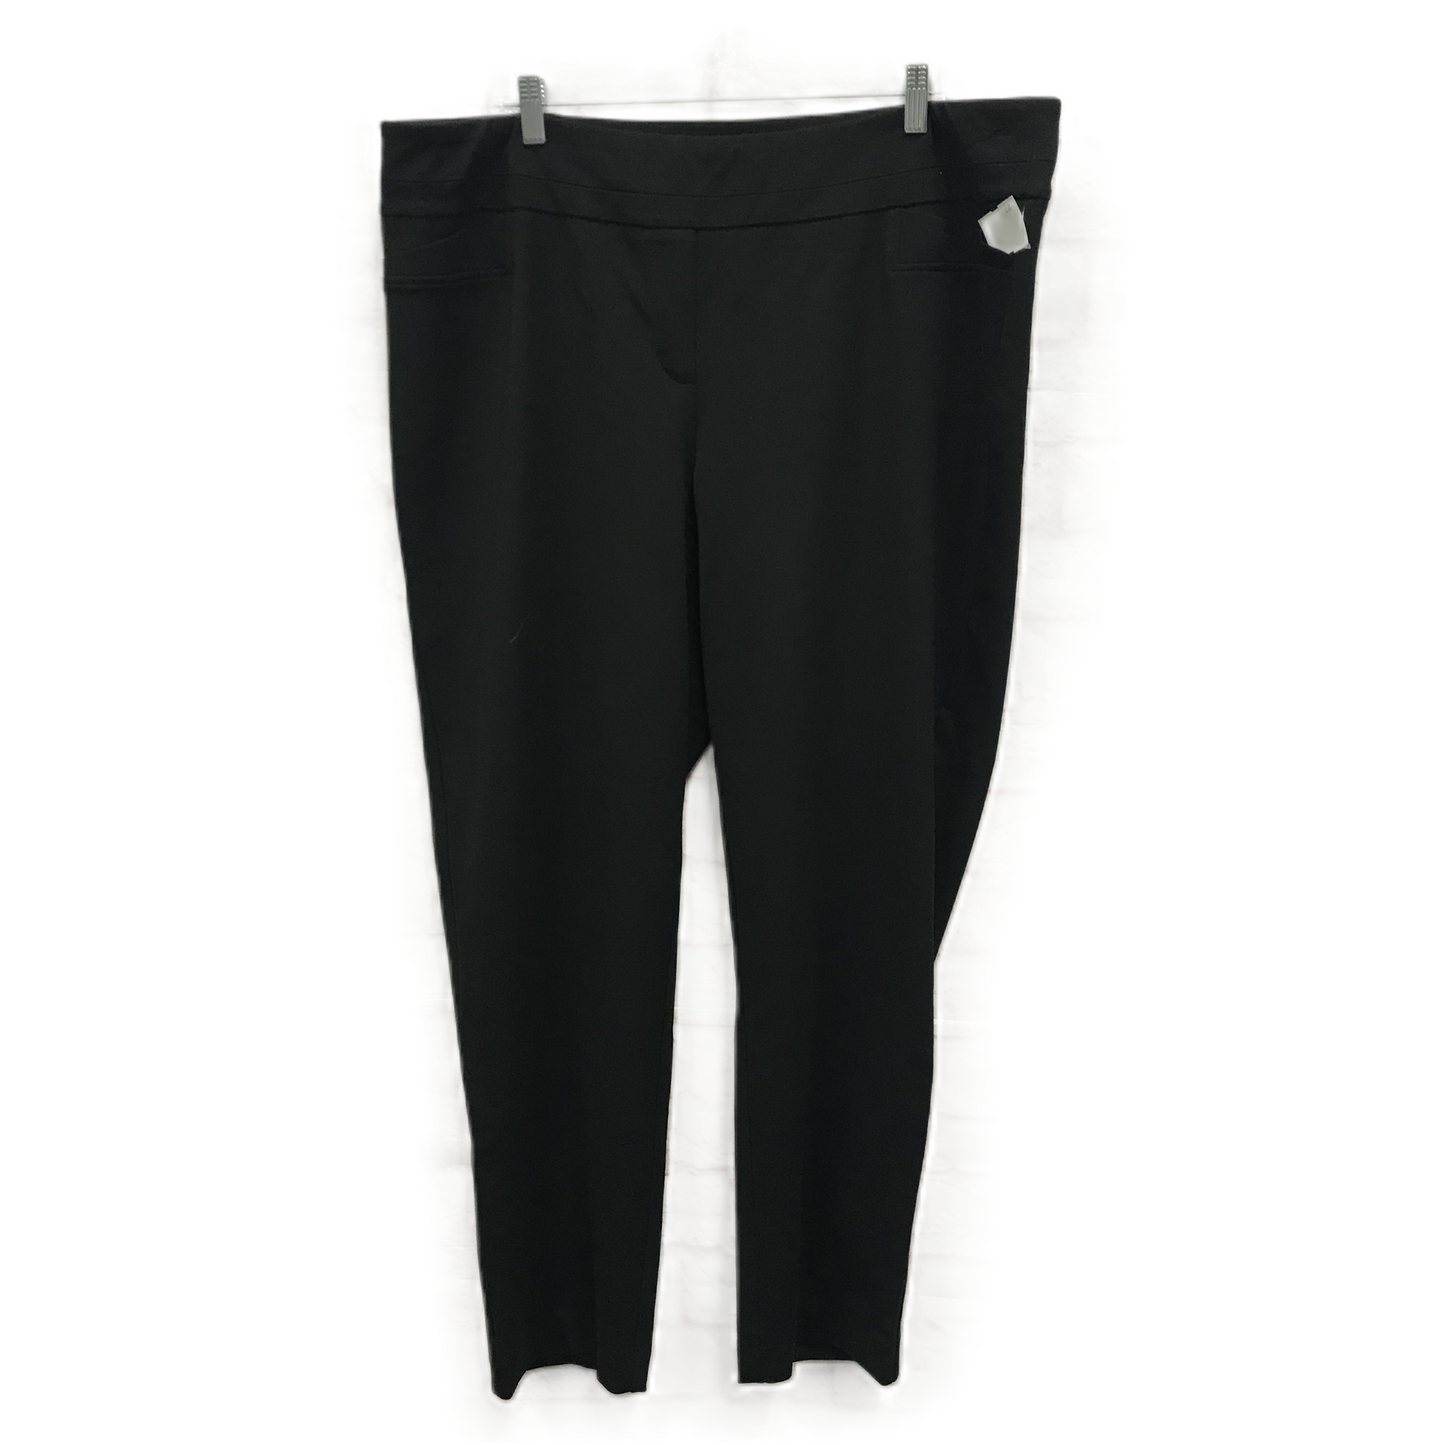 Black Pants Dress By Zac And Rachel, Size: 2x